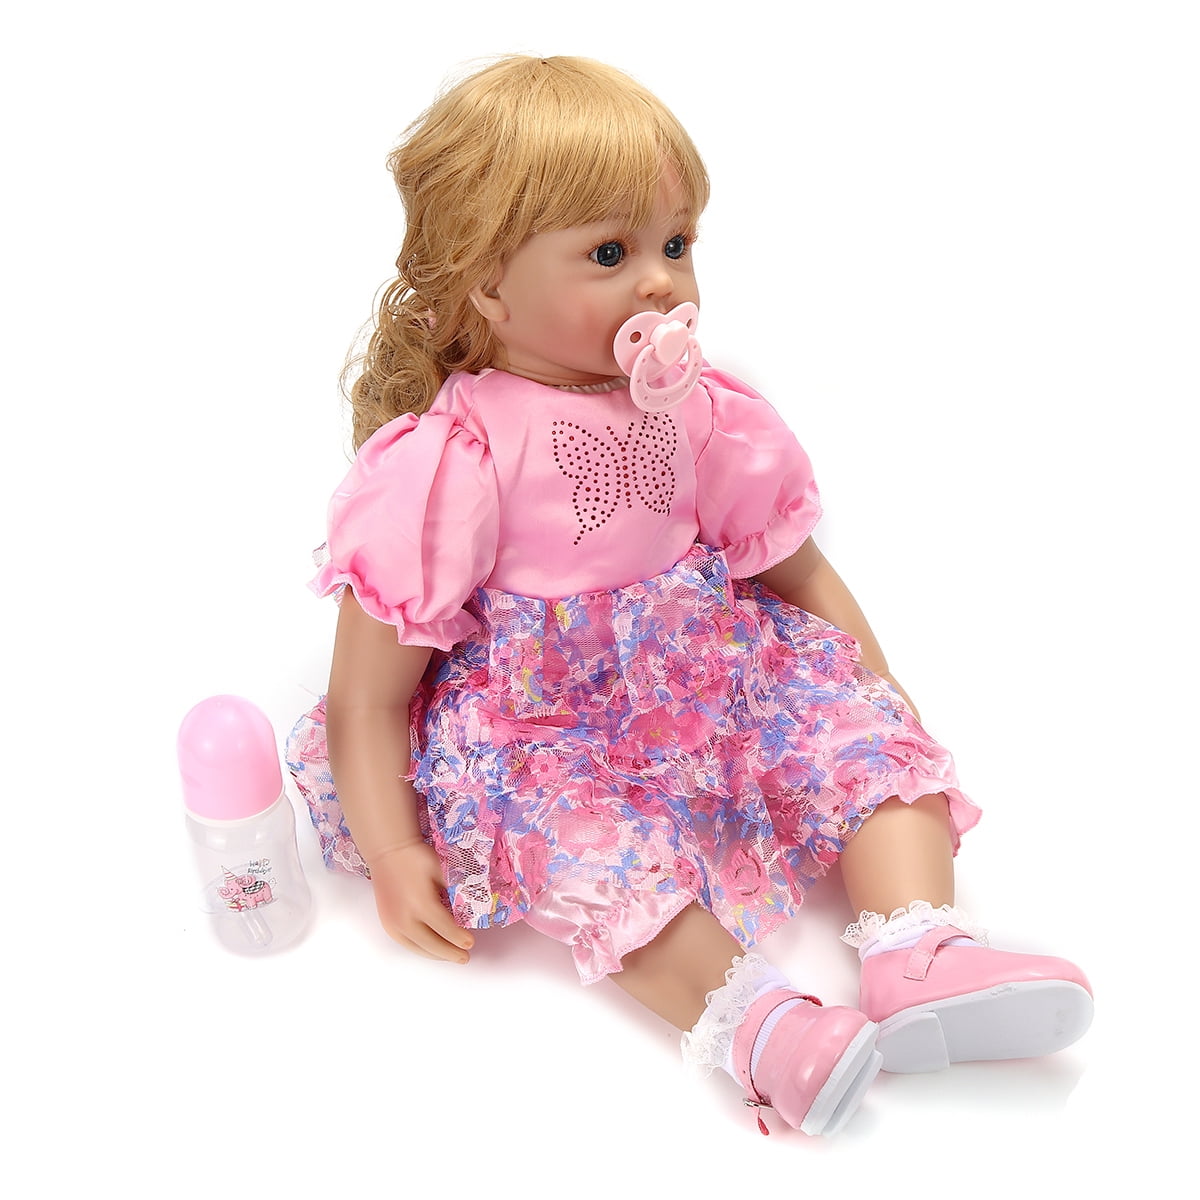 Details about   24in Real Big Size Reborn Toddler Dolls Realistic Child Dolls Vinyl Girl Kids 